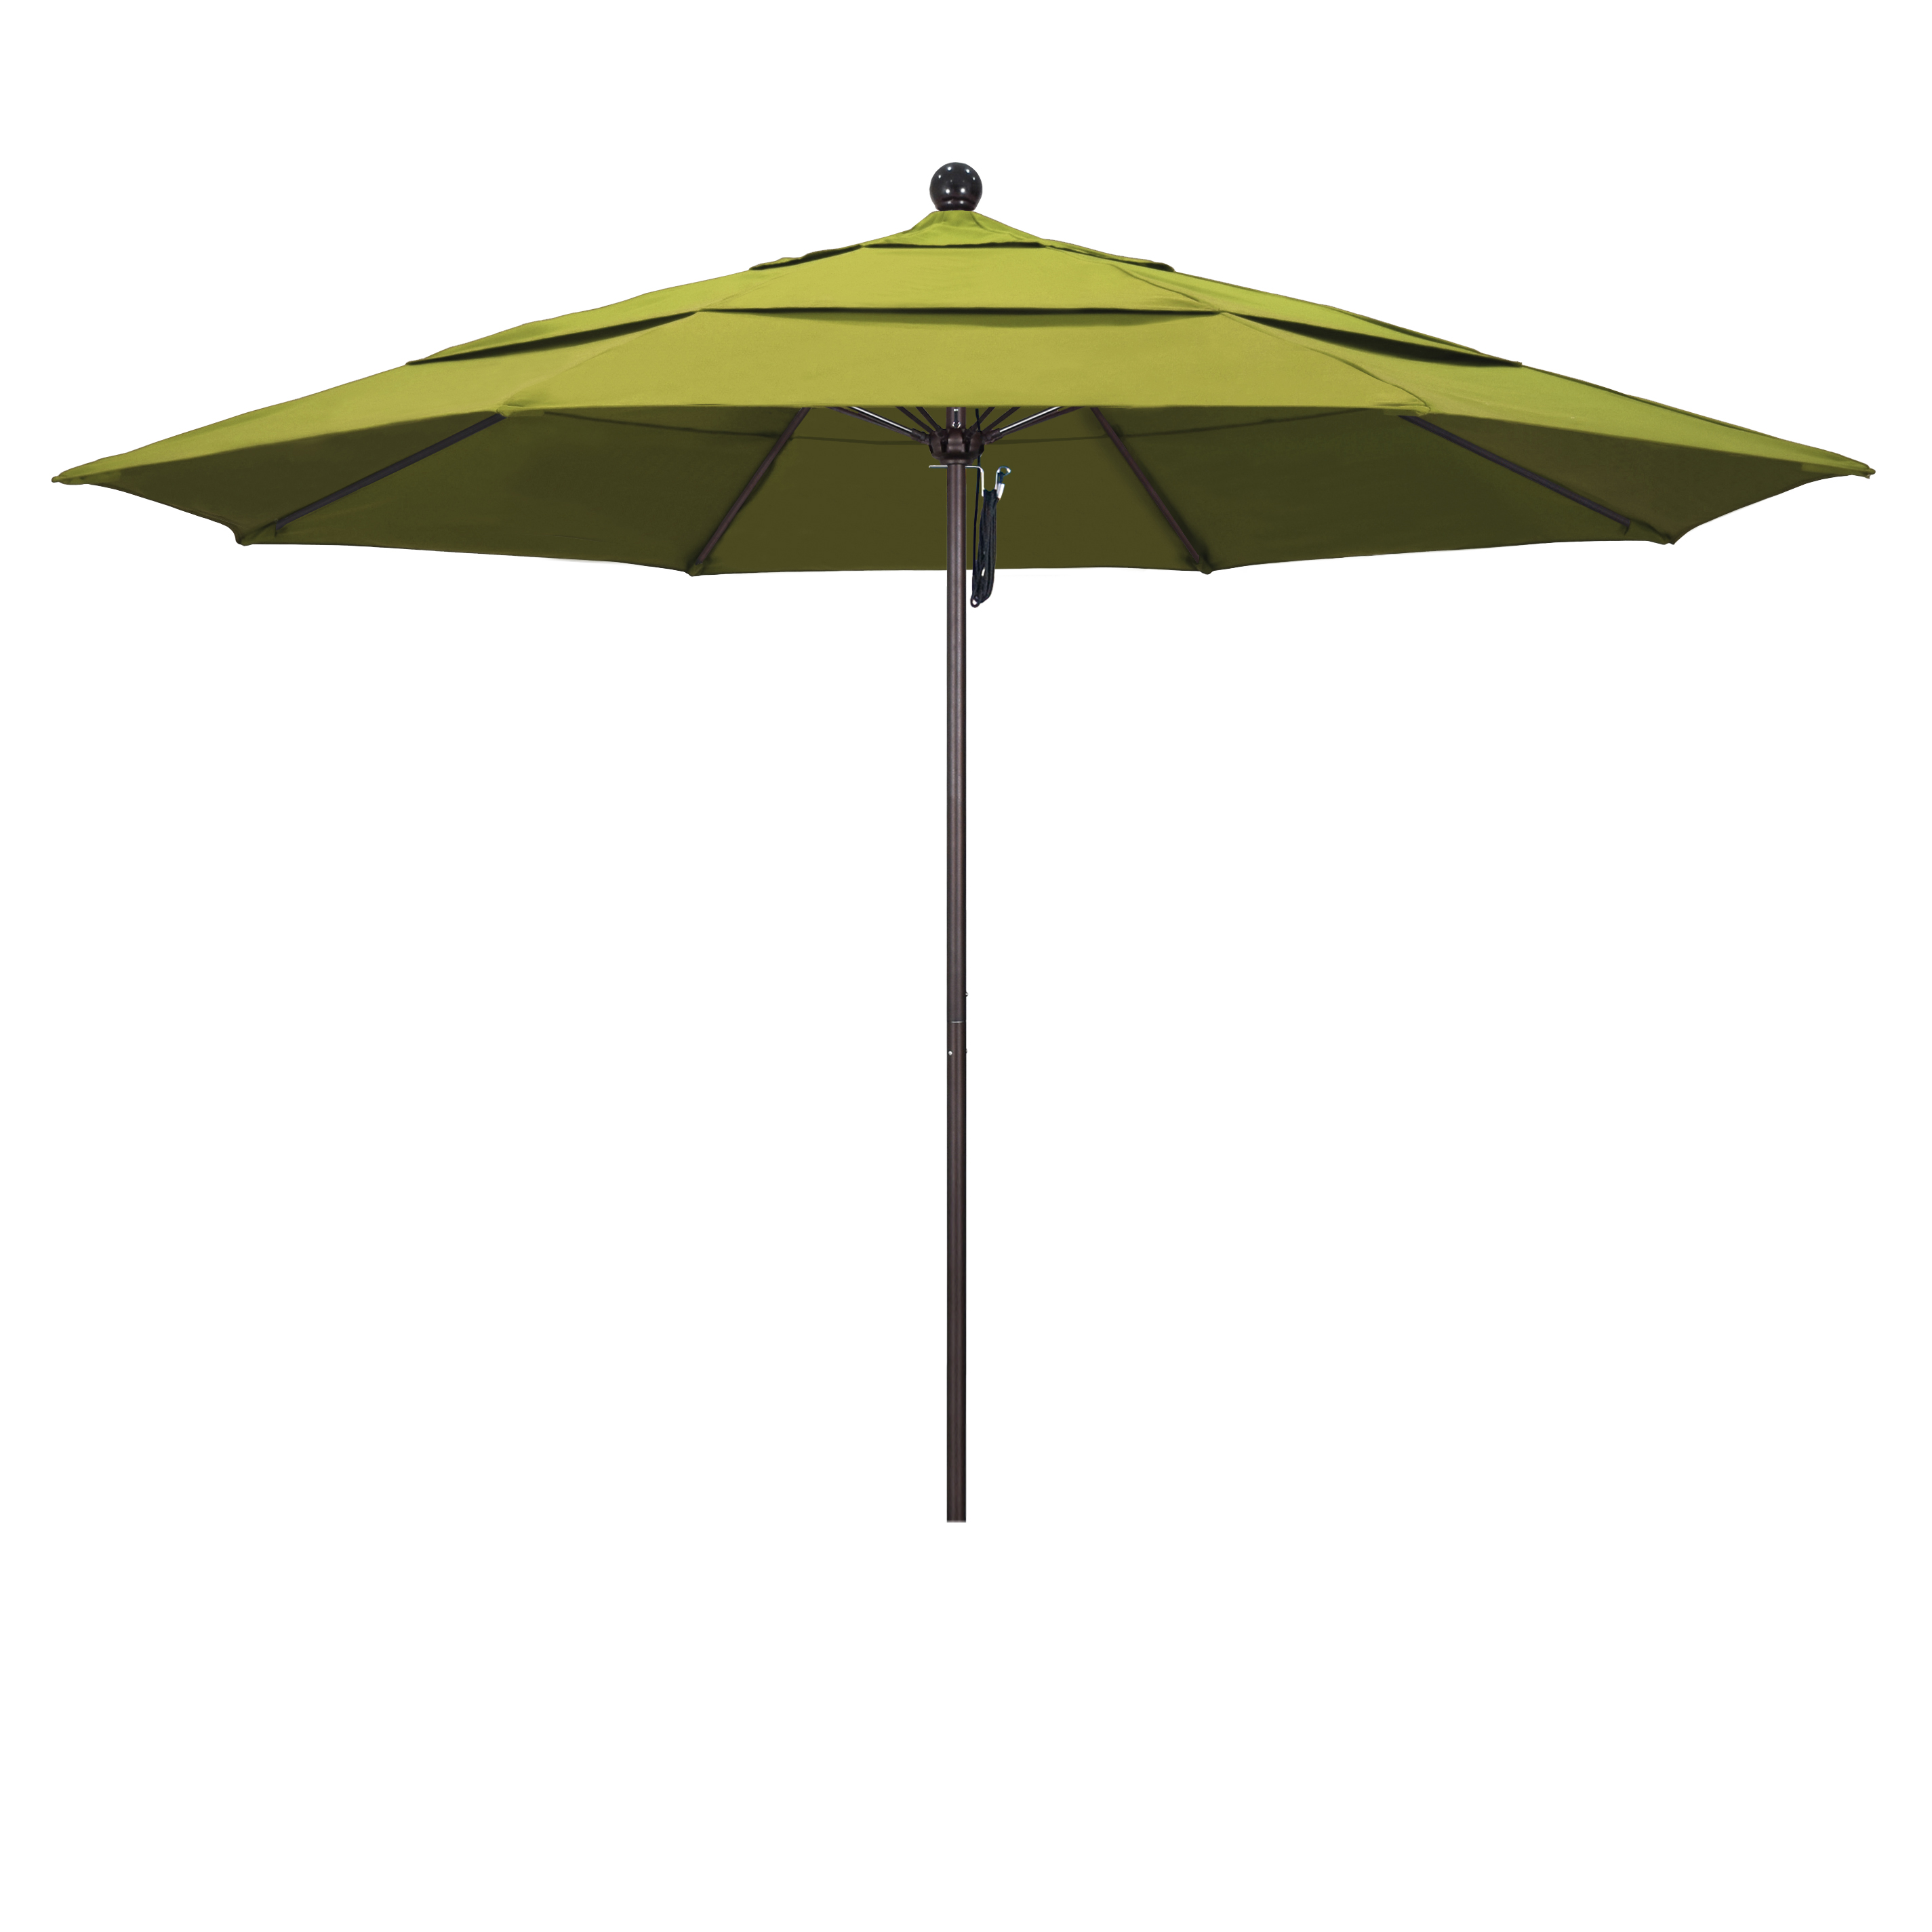 Picture of California Umbrella ALTO118117-F55-DWV 11 ft. Fiberglass Market Umbrella PO DVent Bronze-Olefin-Kiwi